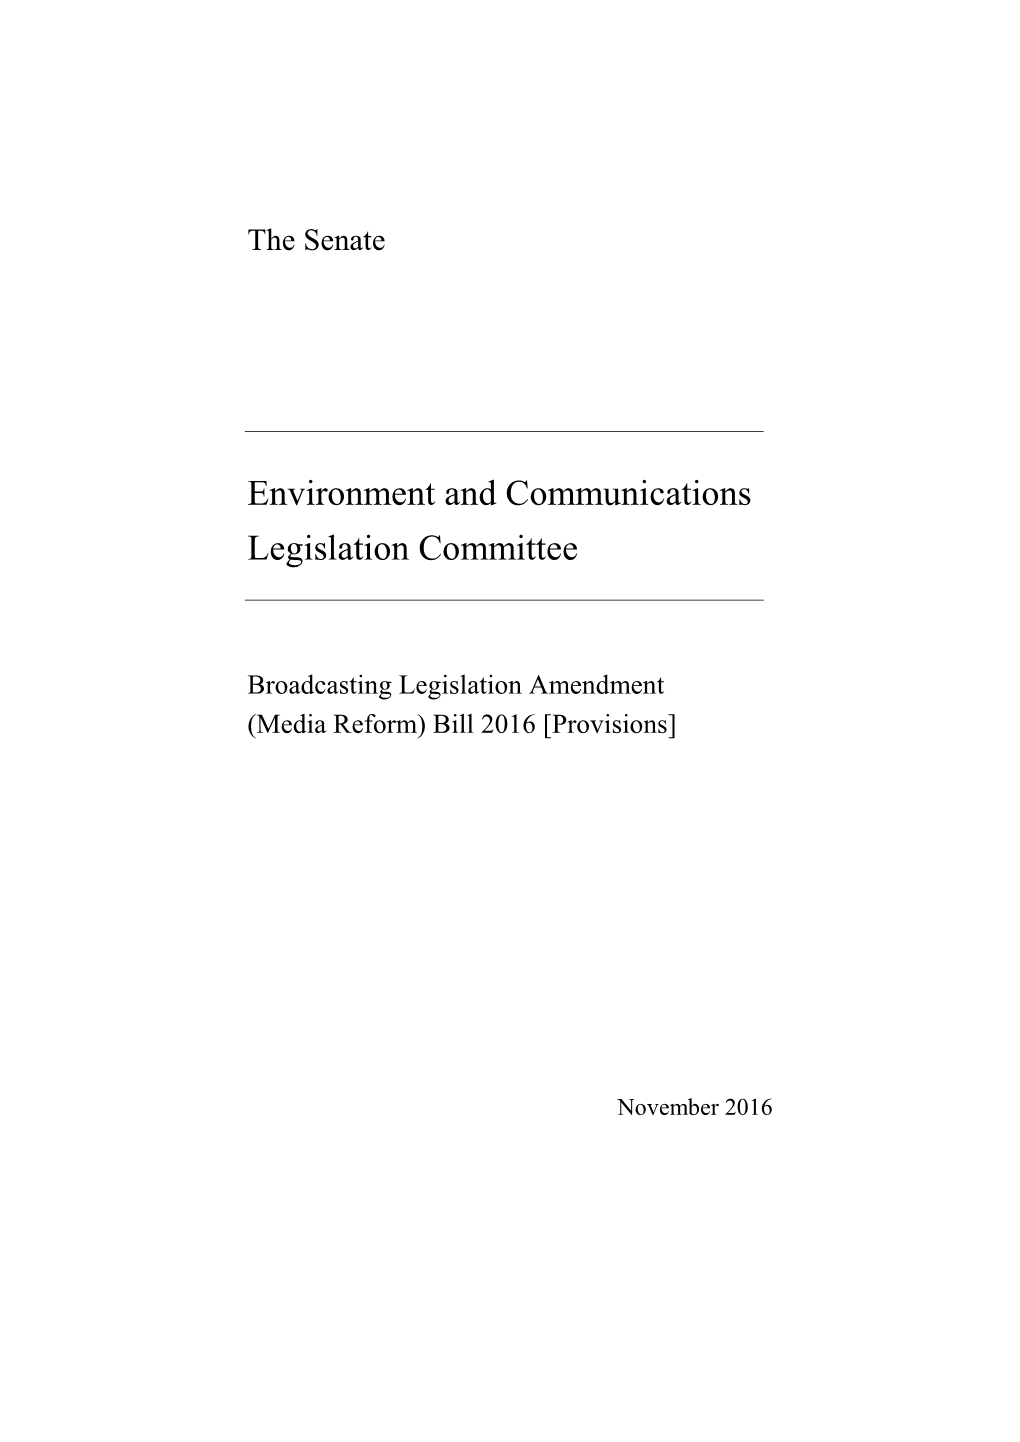 Broadcasting Legislation Amendment (Media Reform) Bill 2016 [Provisions]